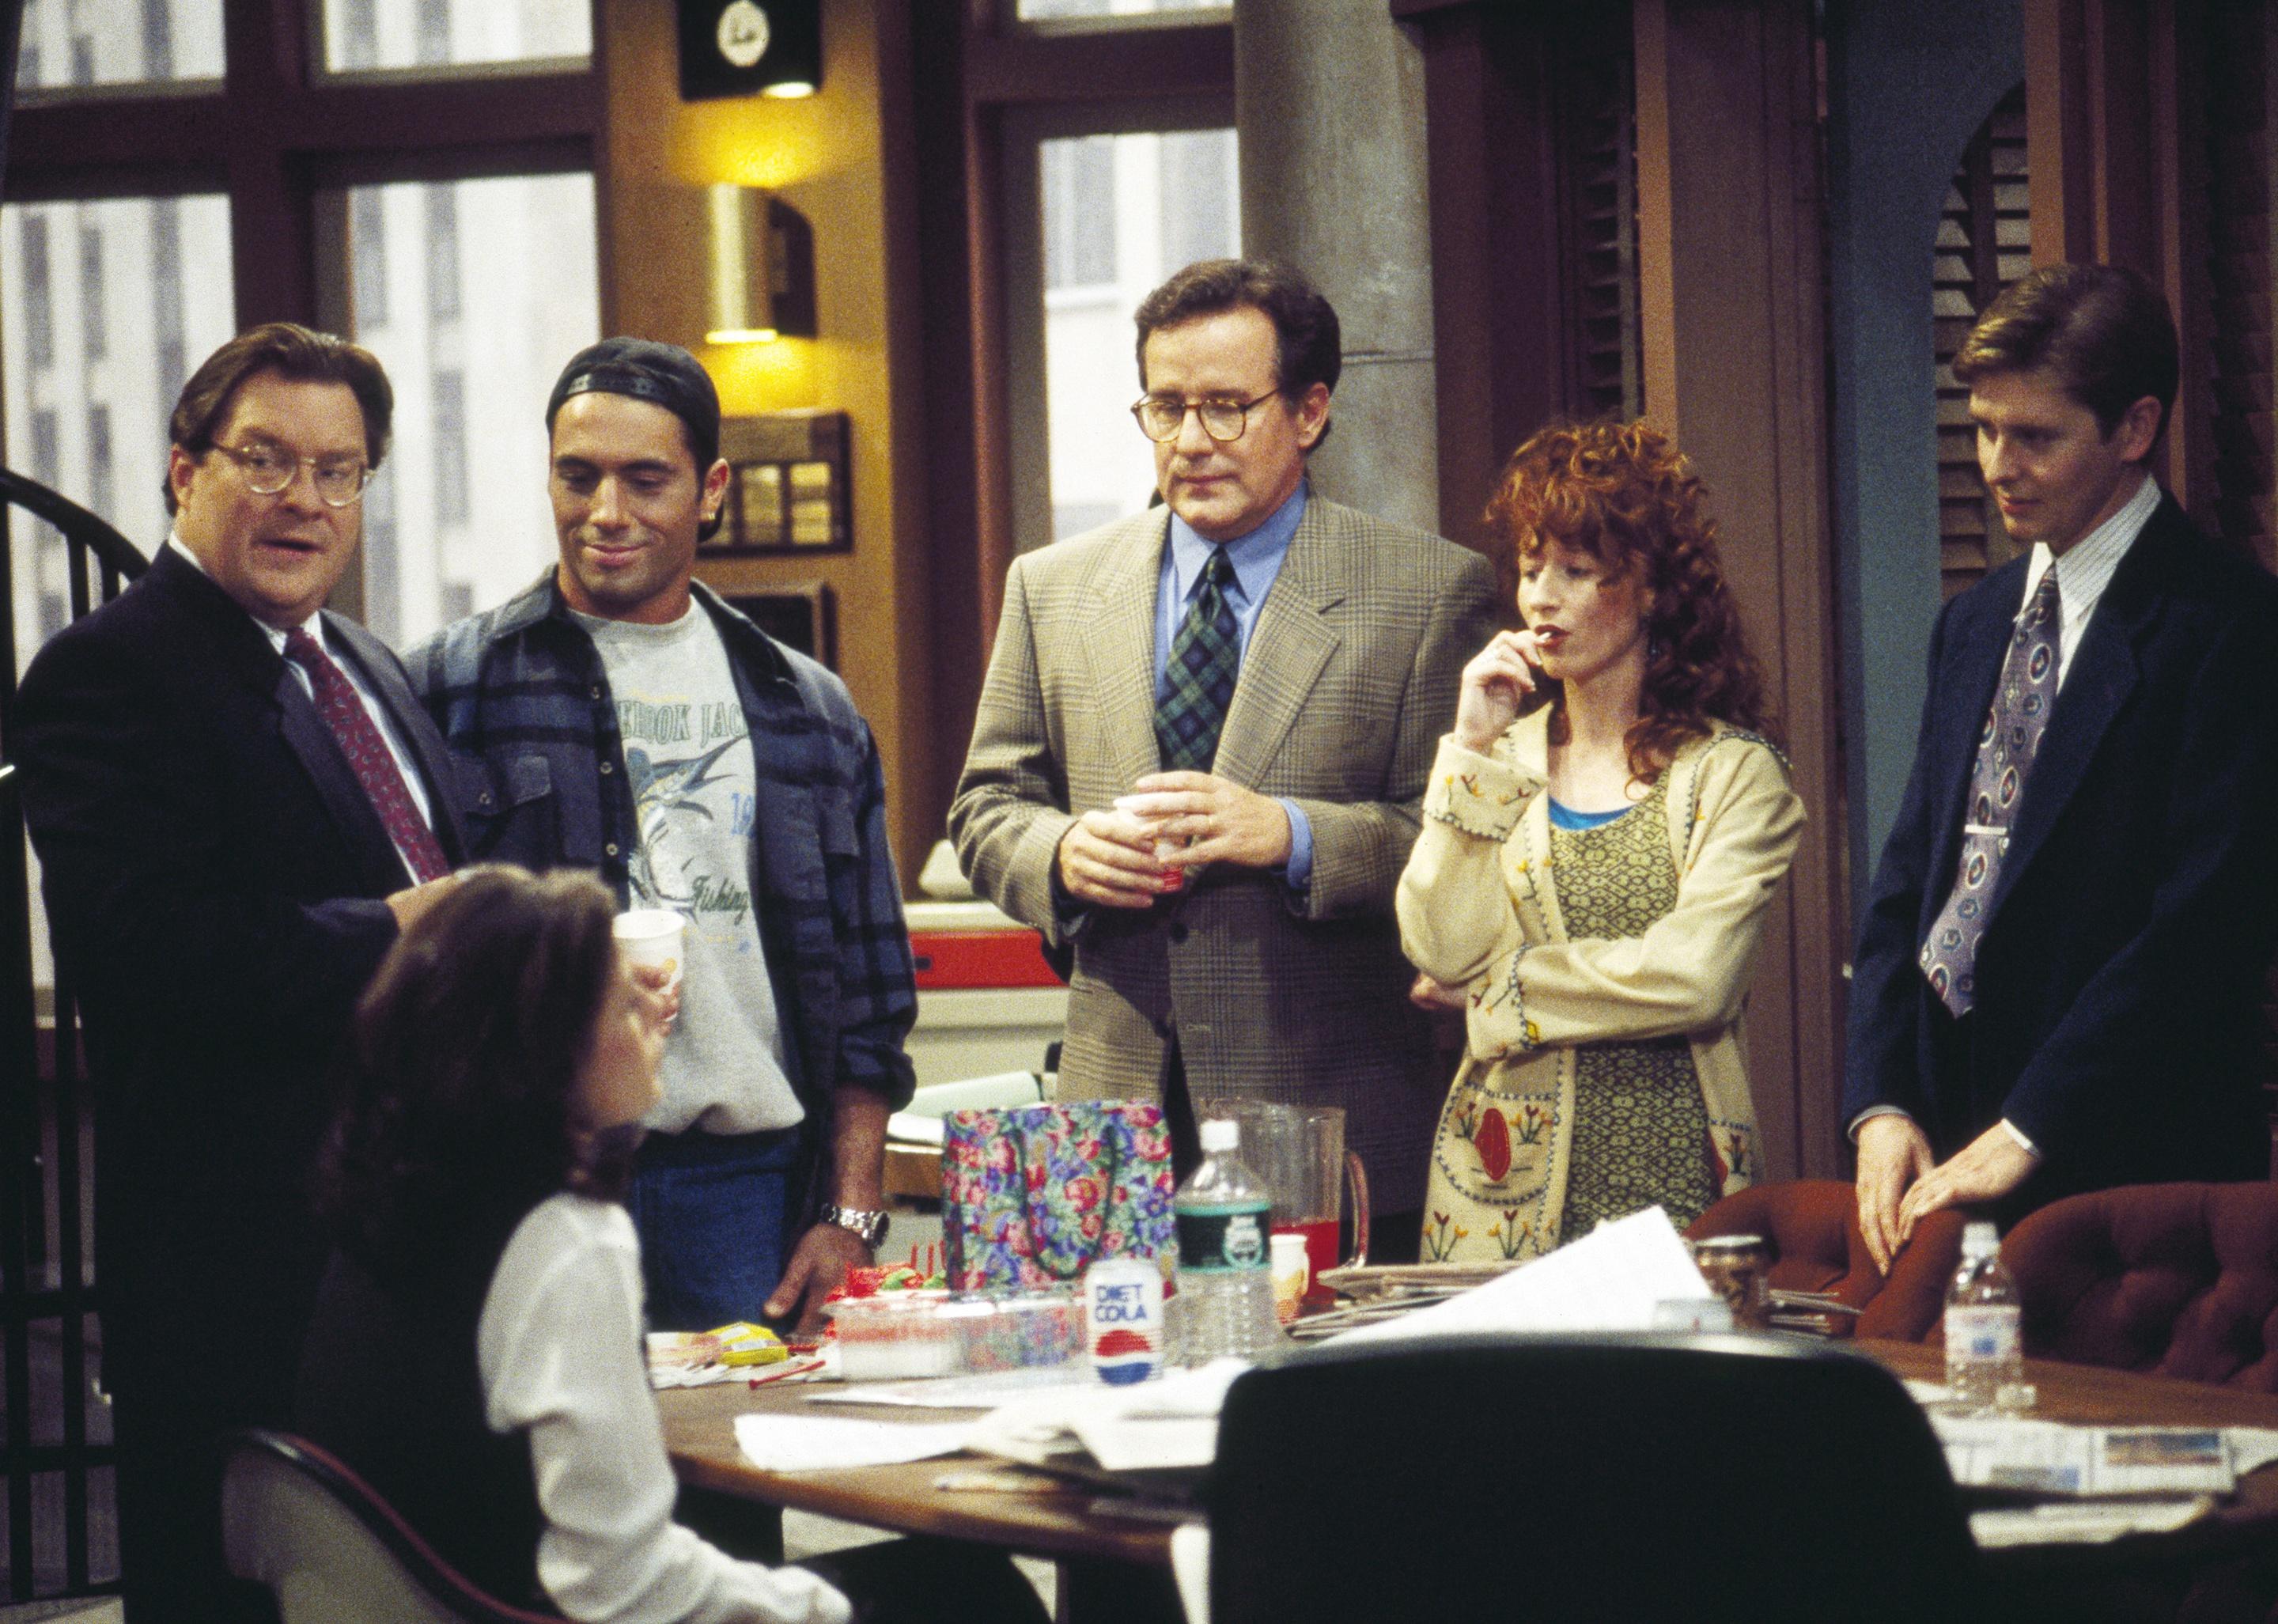 David Foley, Maura Tierney, Phil Hartman, Vicki Lewis, Joe Rogan, and Stephen Root standing around a desk in an office.